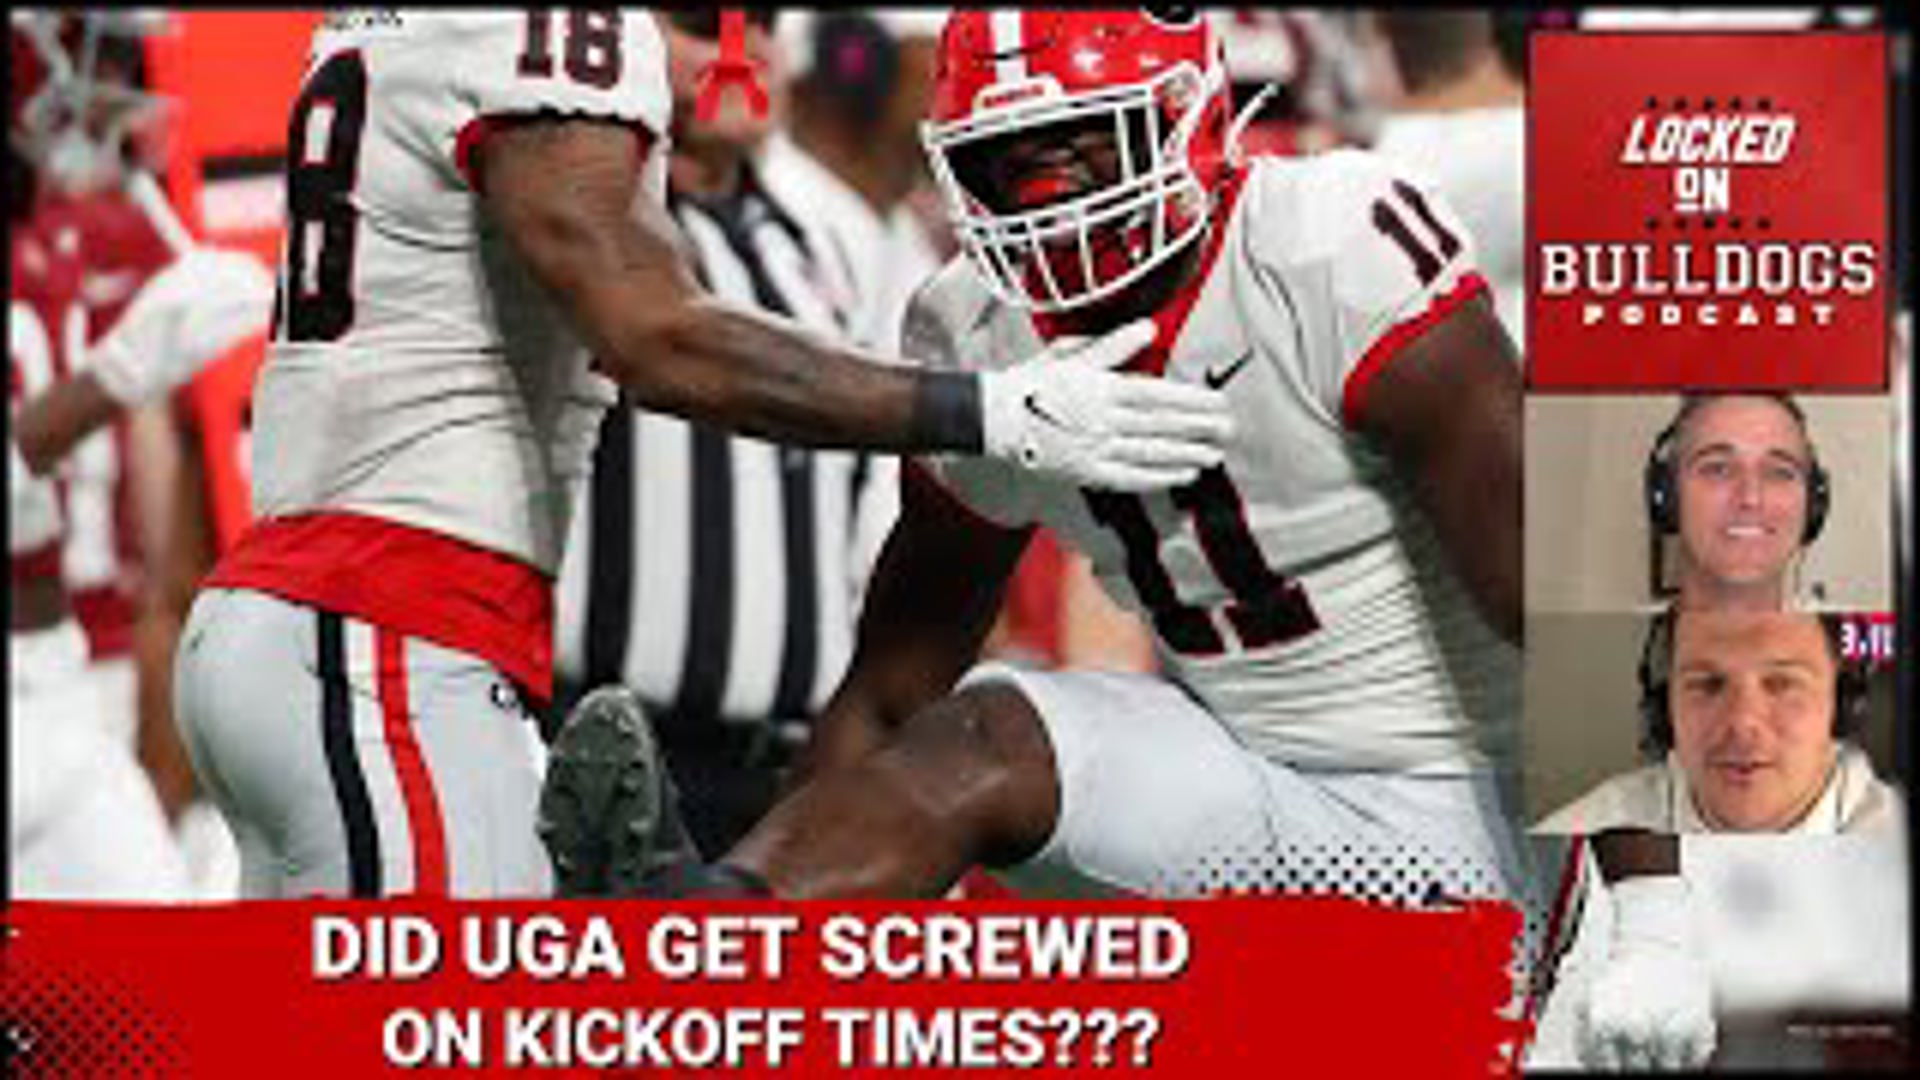 Kickoff times announced!! Georgia Football is getting closer!